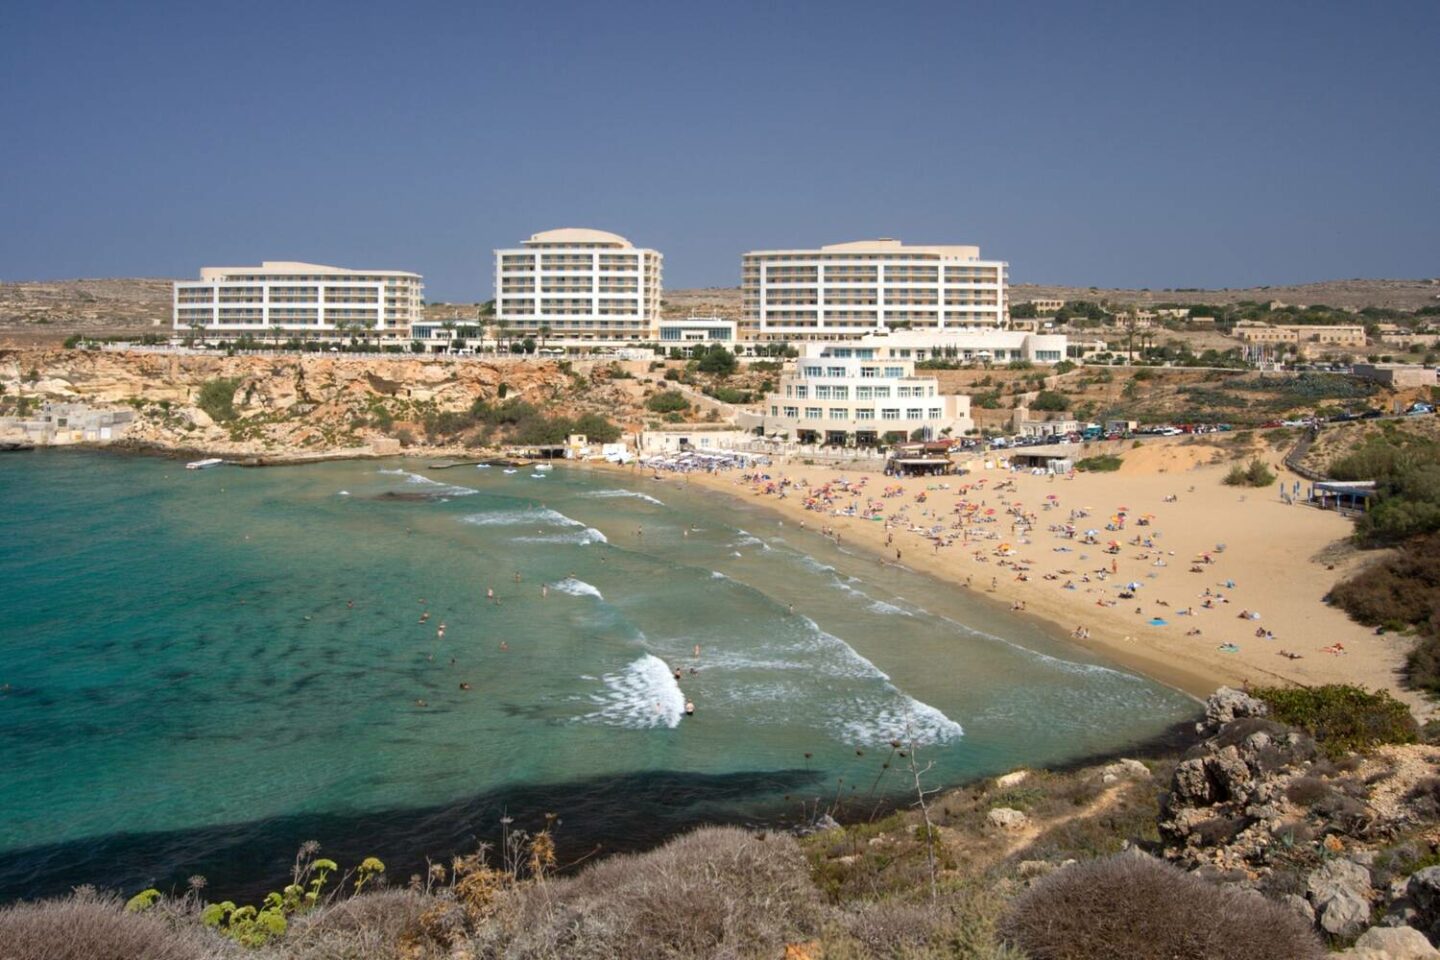 Visiting Golden Bay Beach in Malta